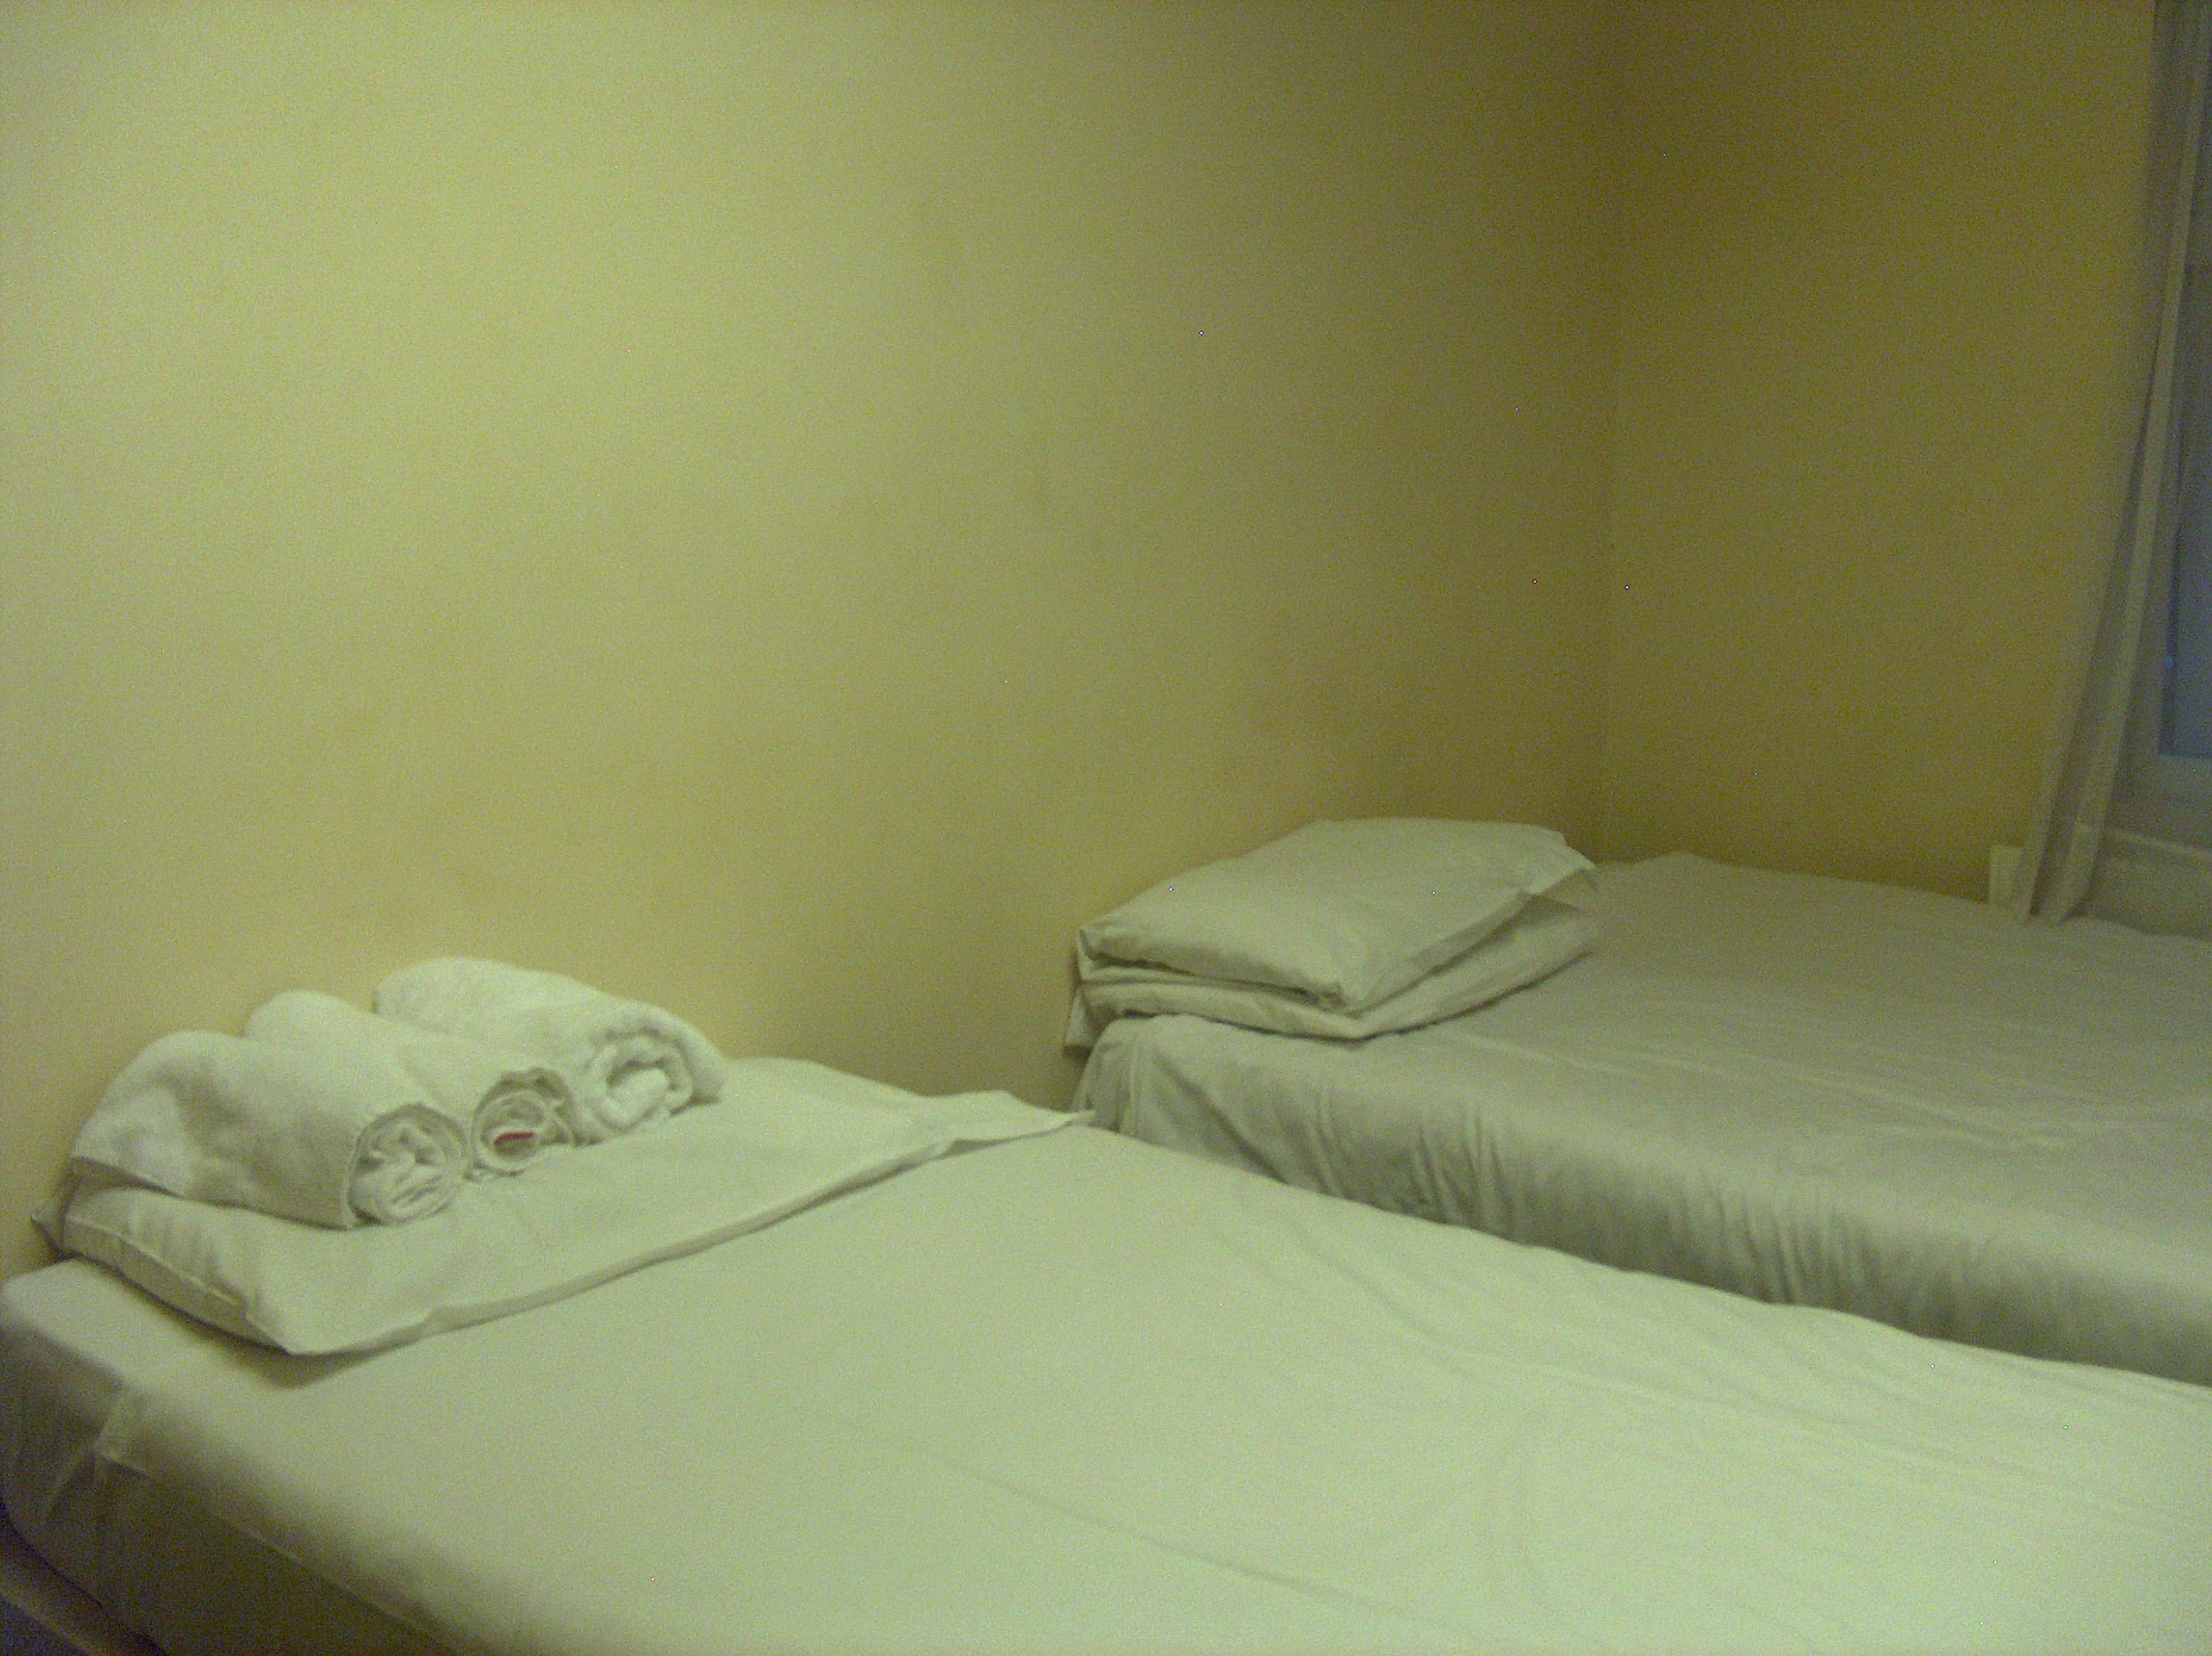 Bad mattress, thin towels, dirty walls, dire room